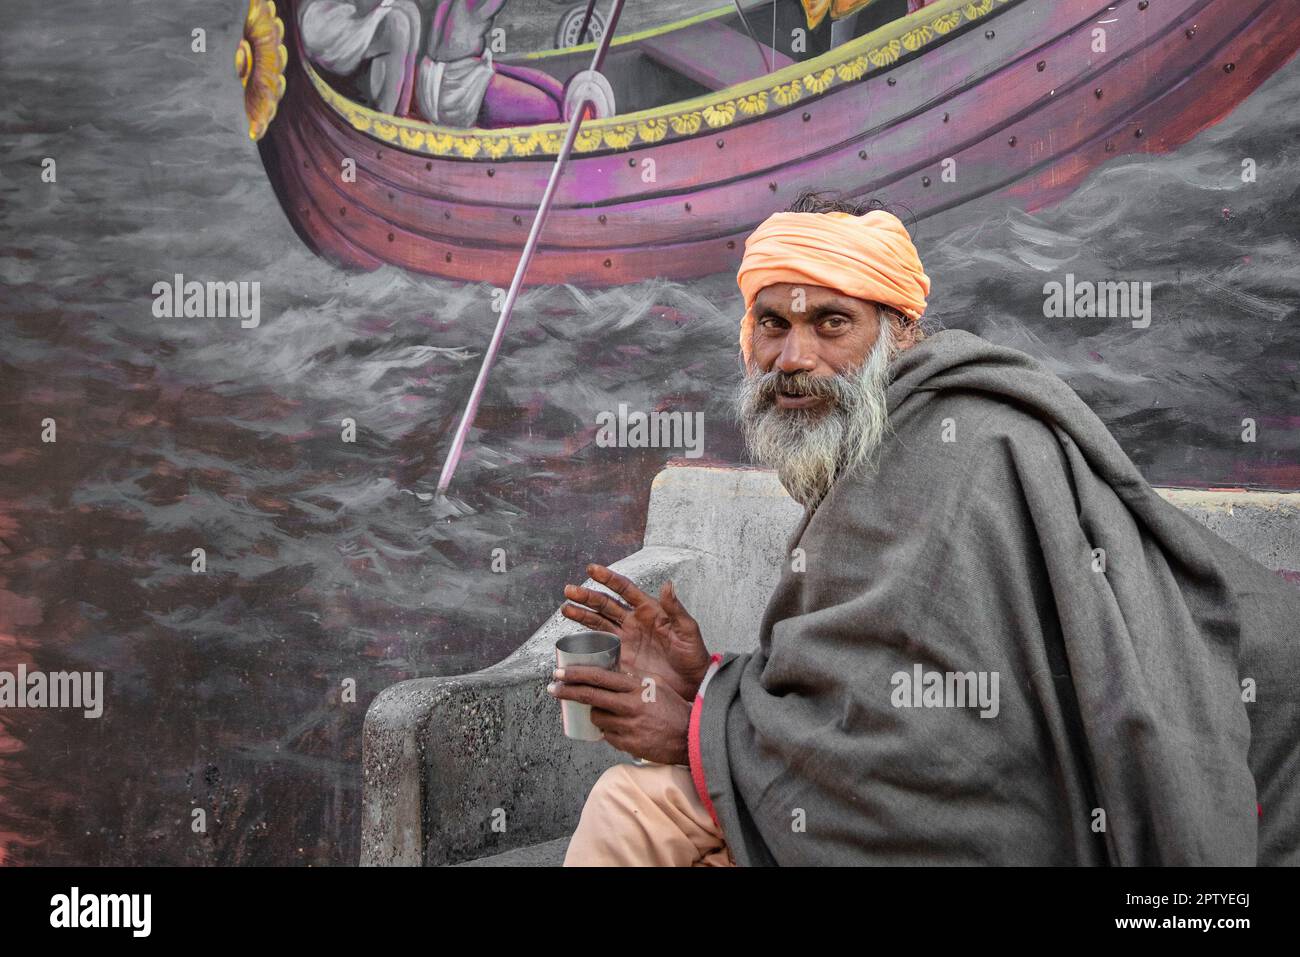 India, Uttarakhand, Rishikesh, Sadhu, uomo santo, di fronte al murale. Foto Stock